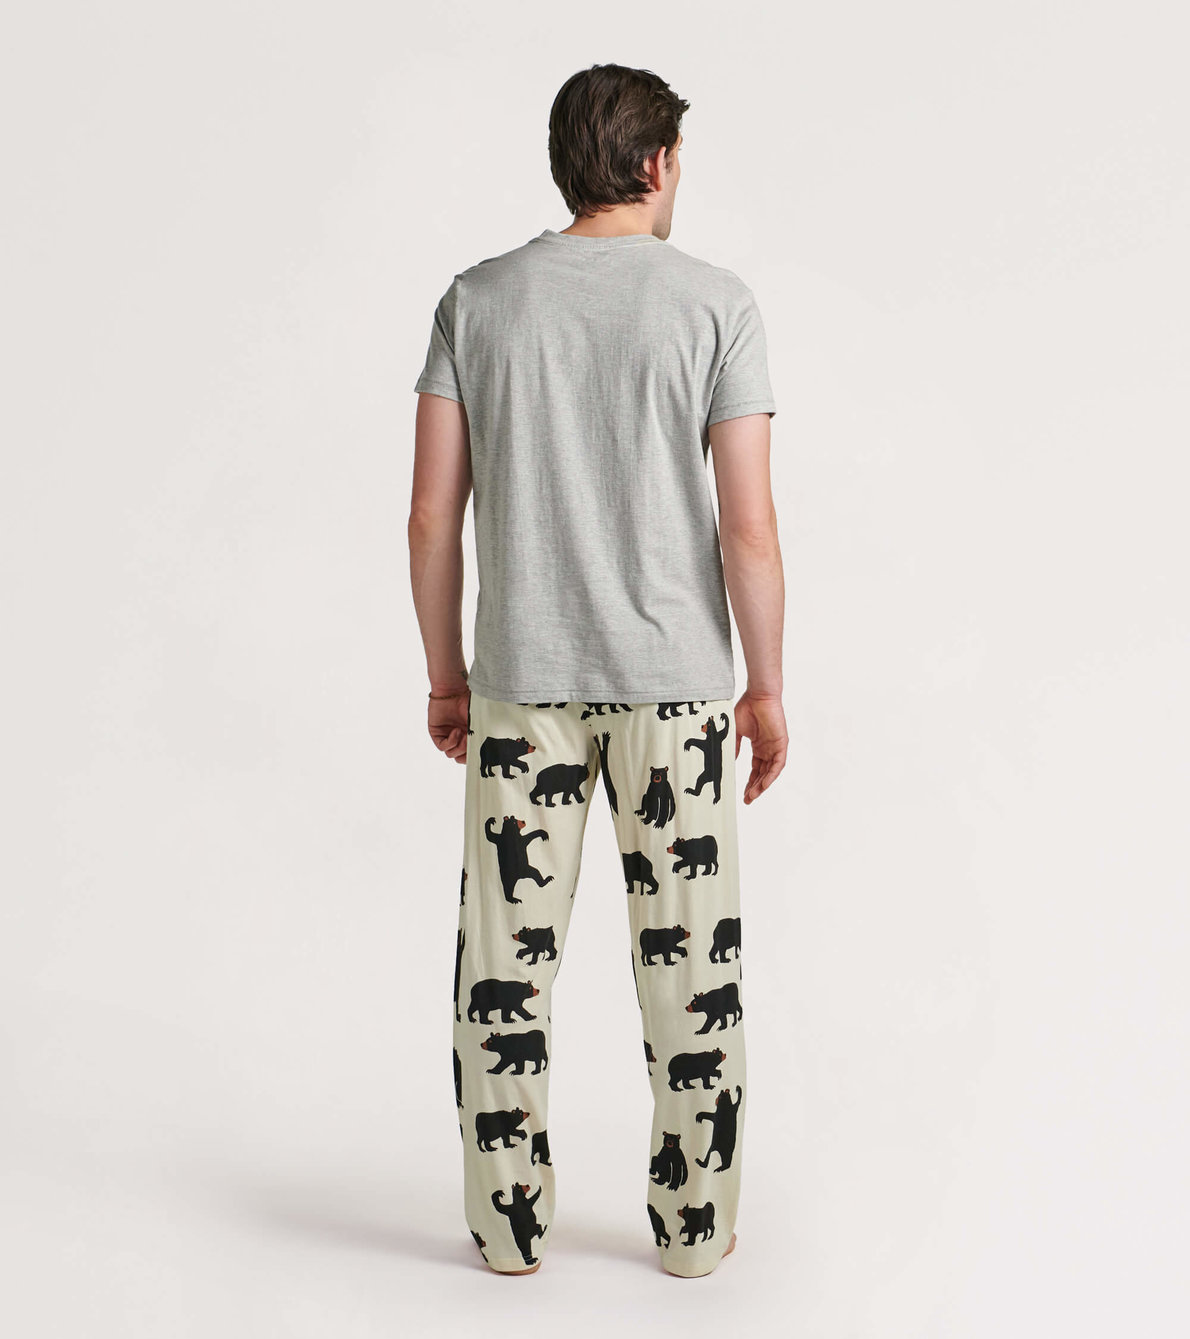 View larger image of Bears Men's Tee and Pants Pajama Separates